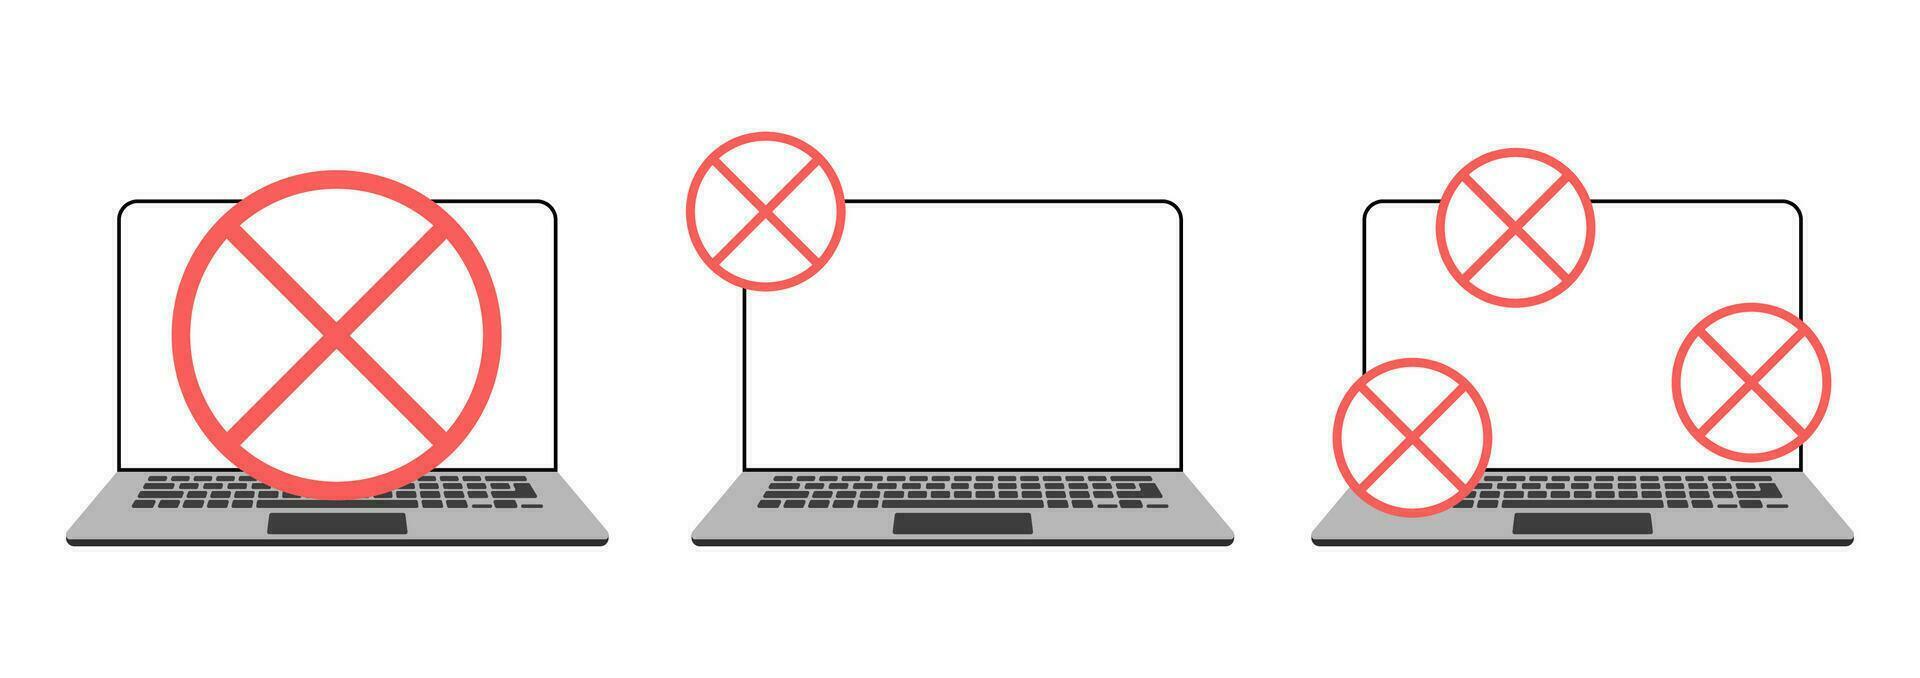 banido computador portátil placa. aviso, computador portátil com proibido placa em tela, segurança sistema vetor